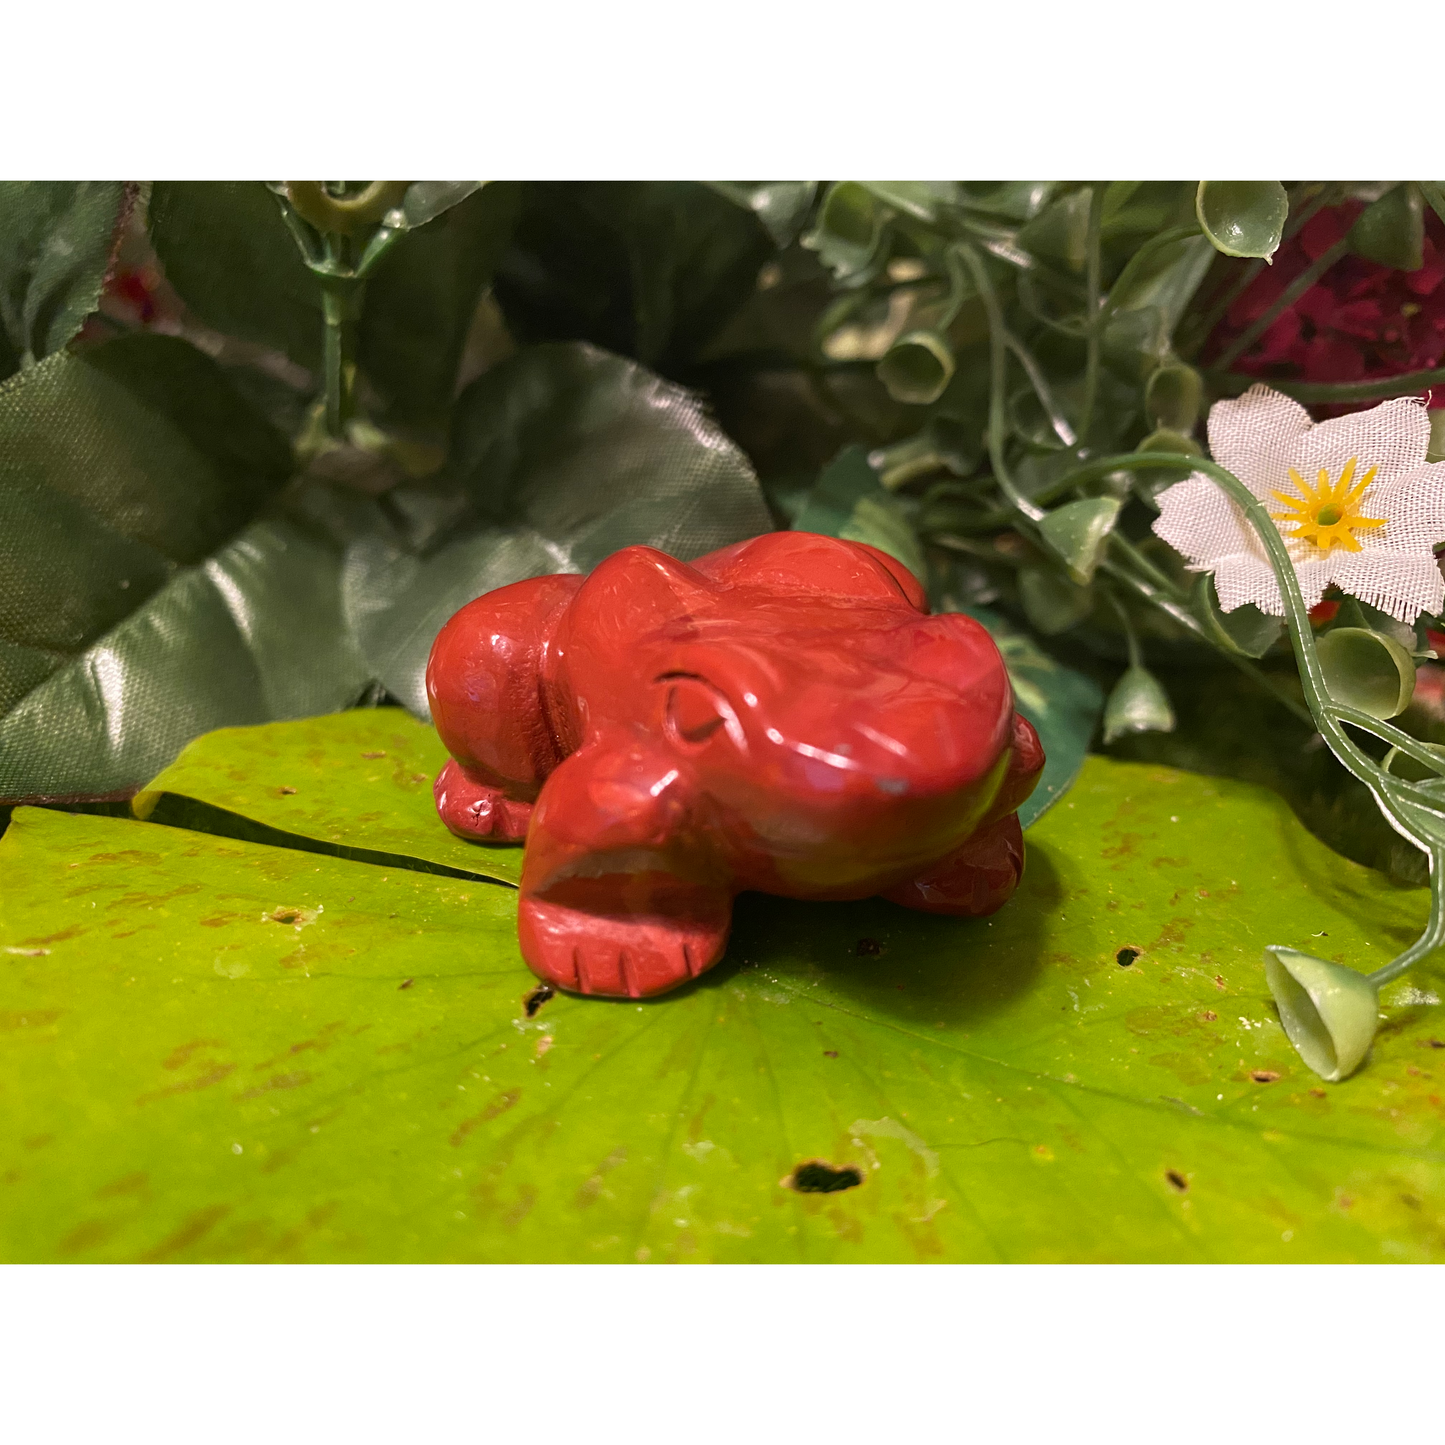 Invoke Frog energy to help with transformation, abundance & renewal!